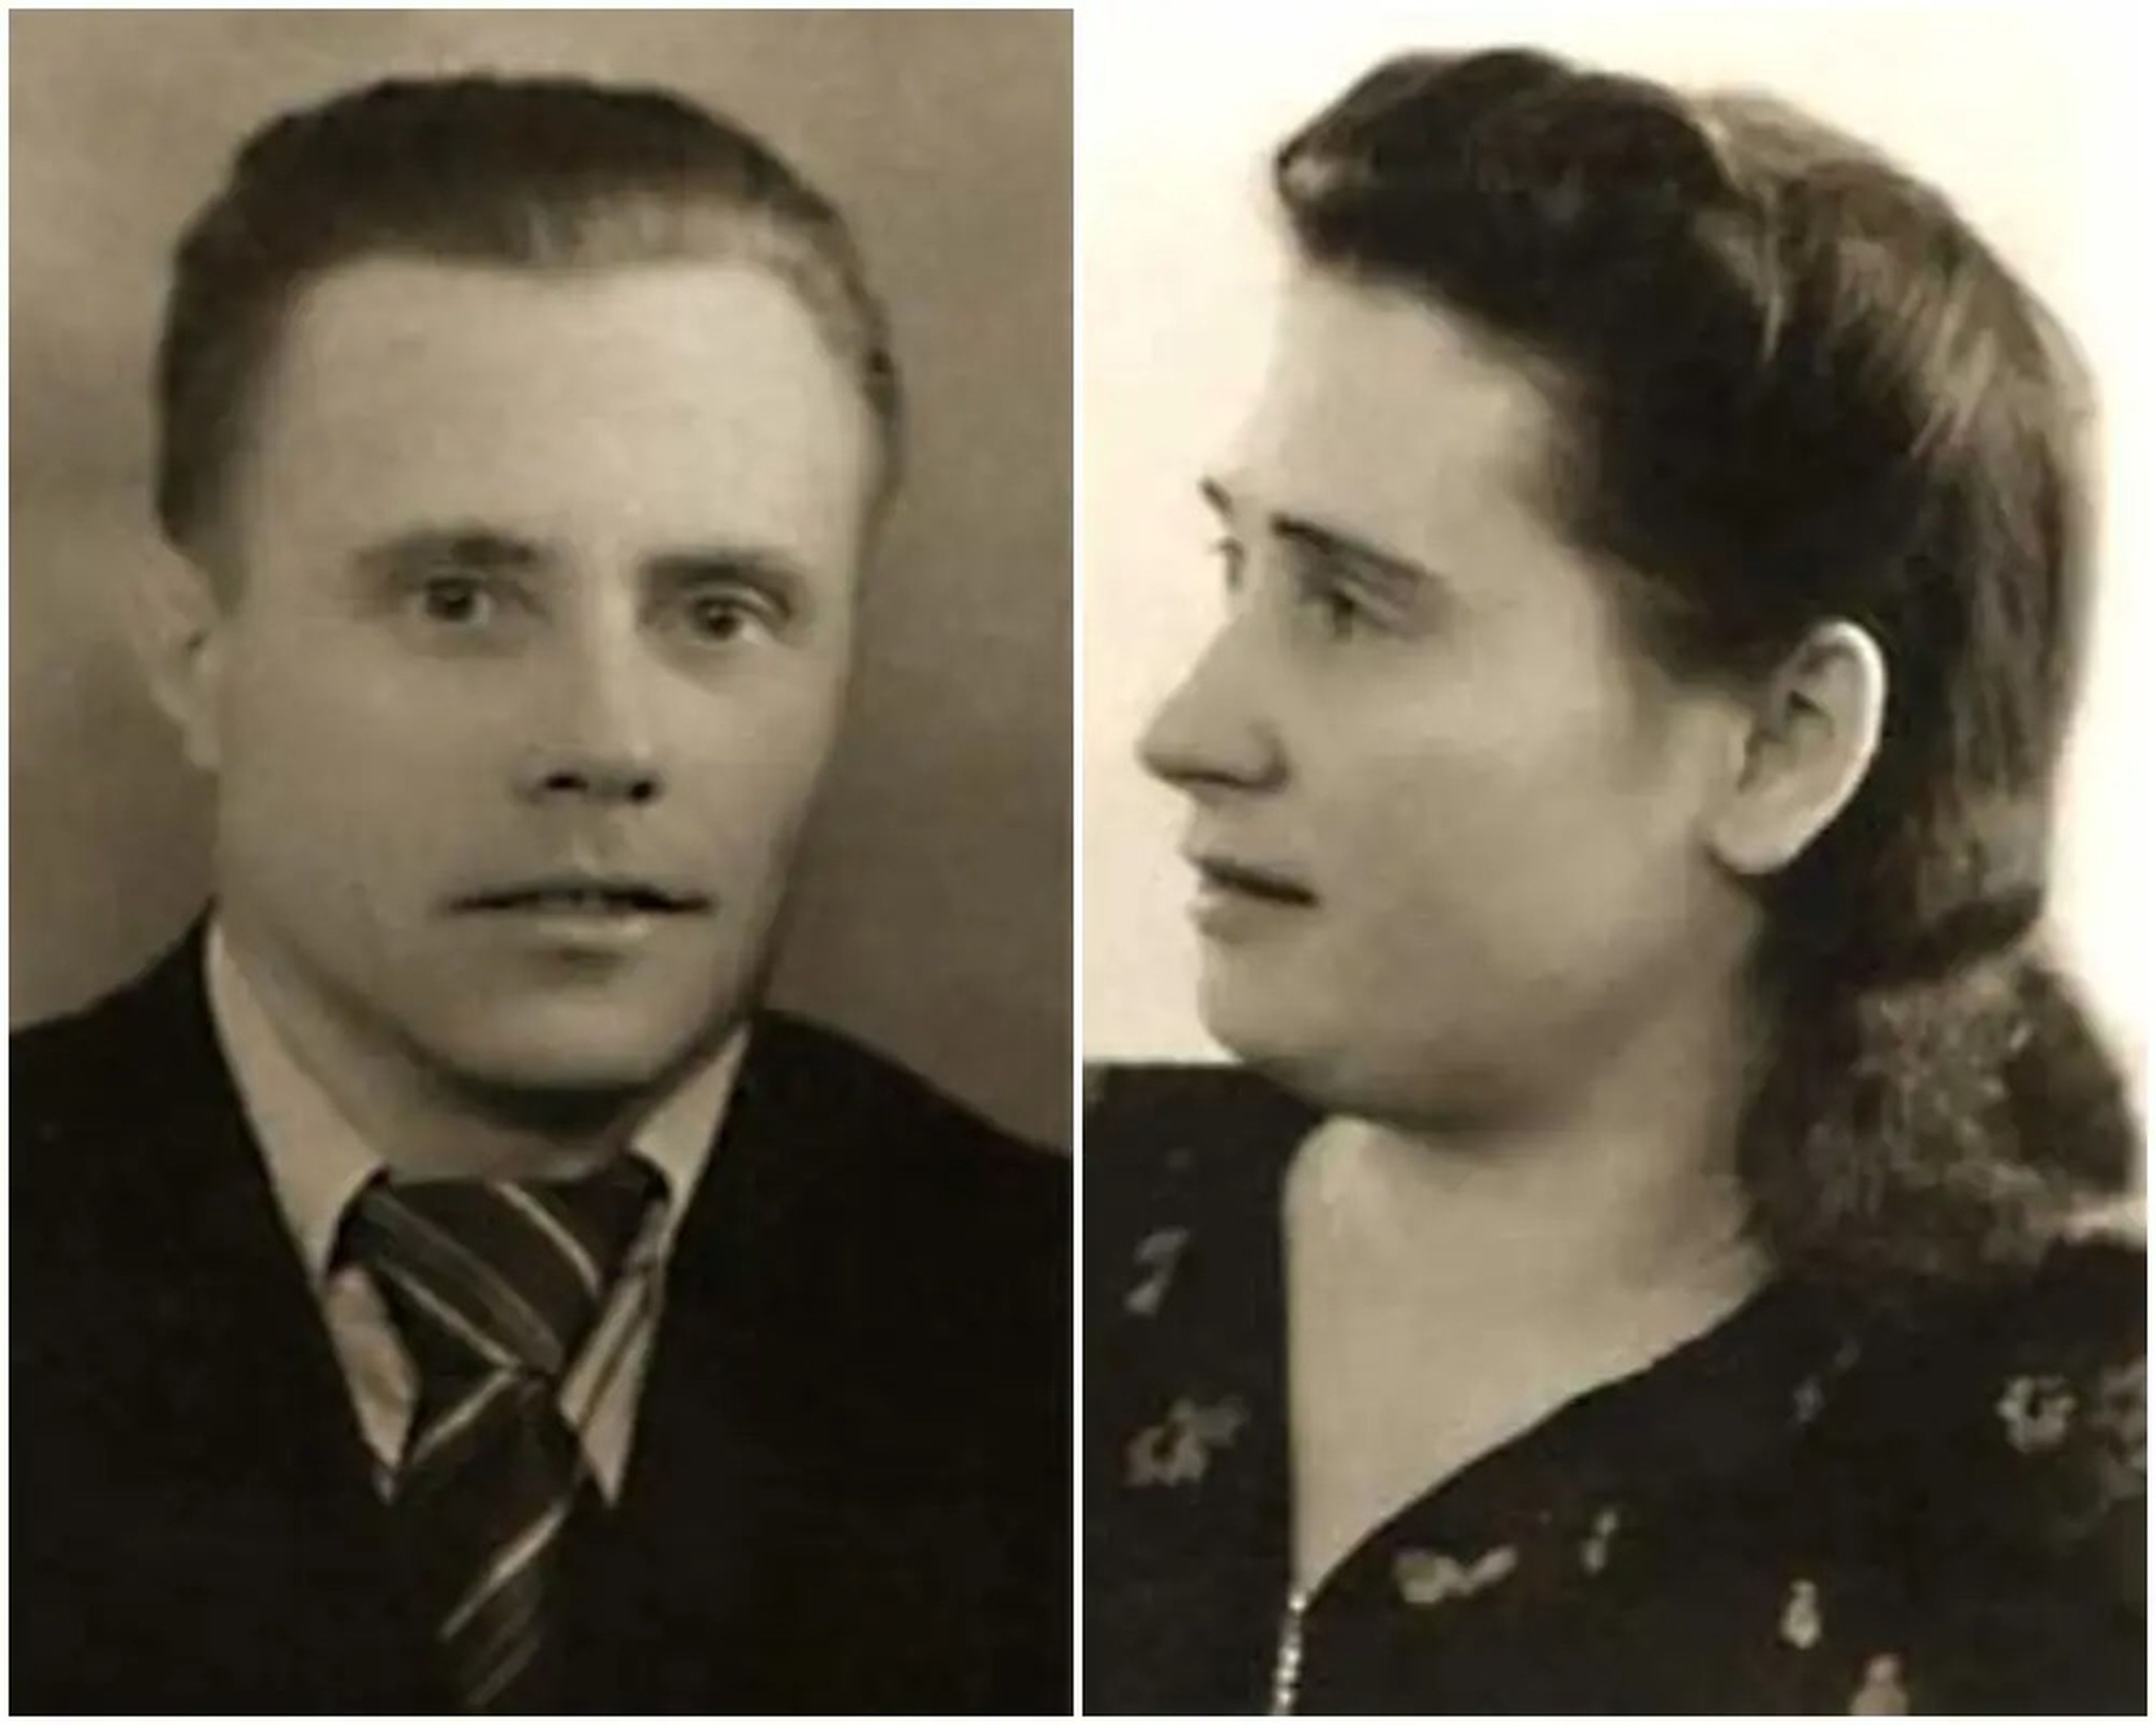 El padre de Putin, Vladímir Spiridonovich Putin, y su madre, Maria Ivanovna Shelomova.